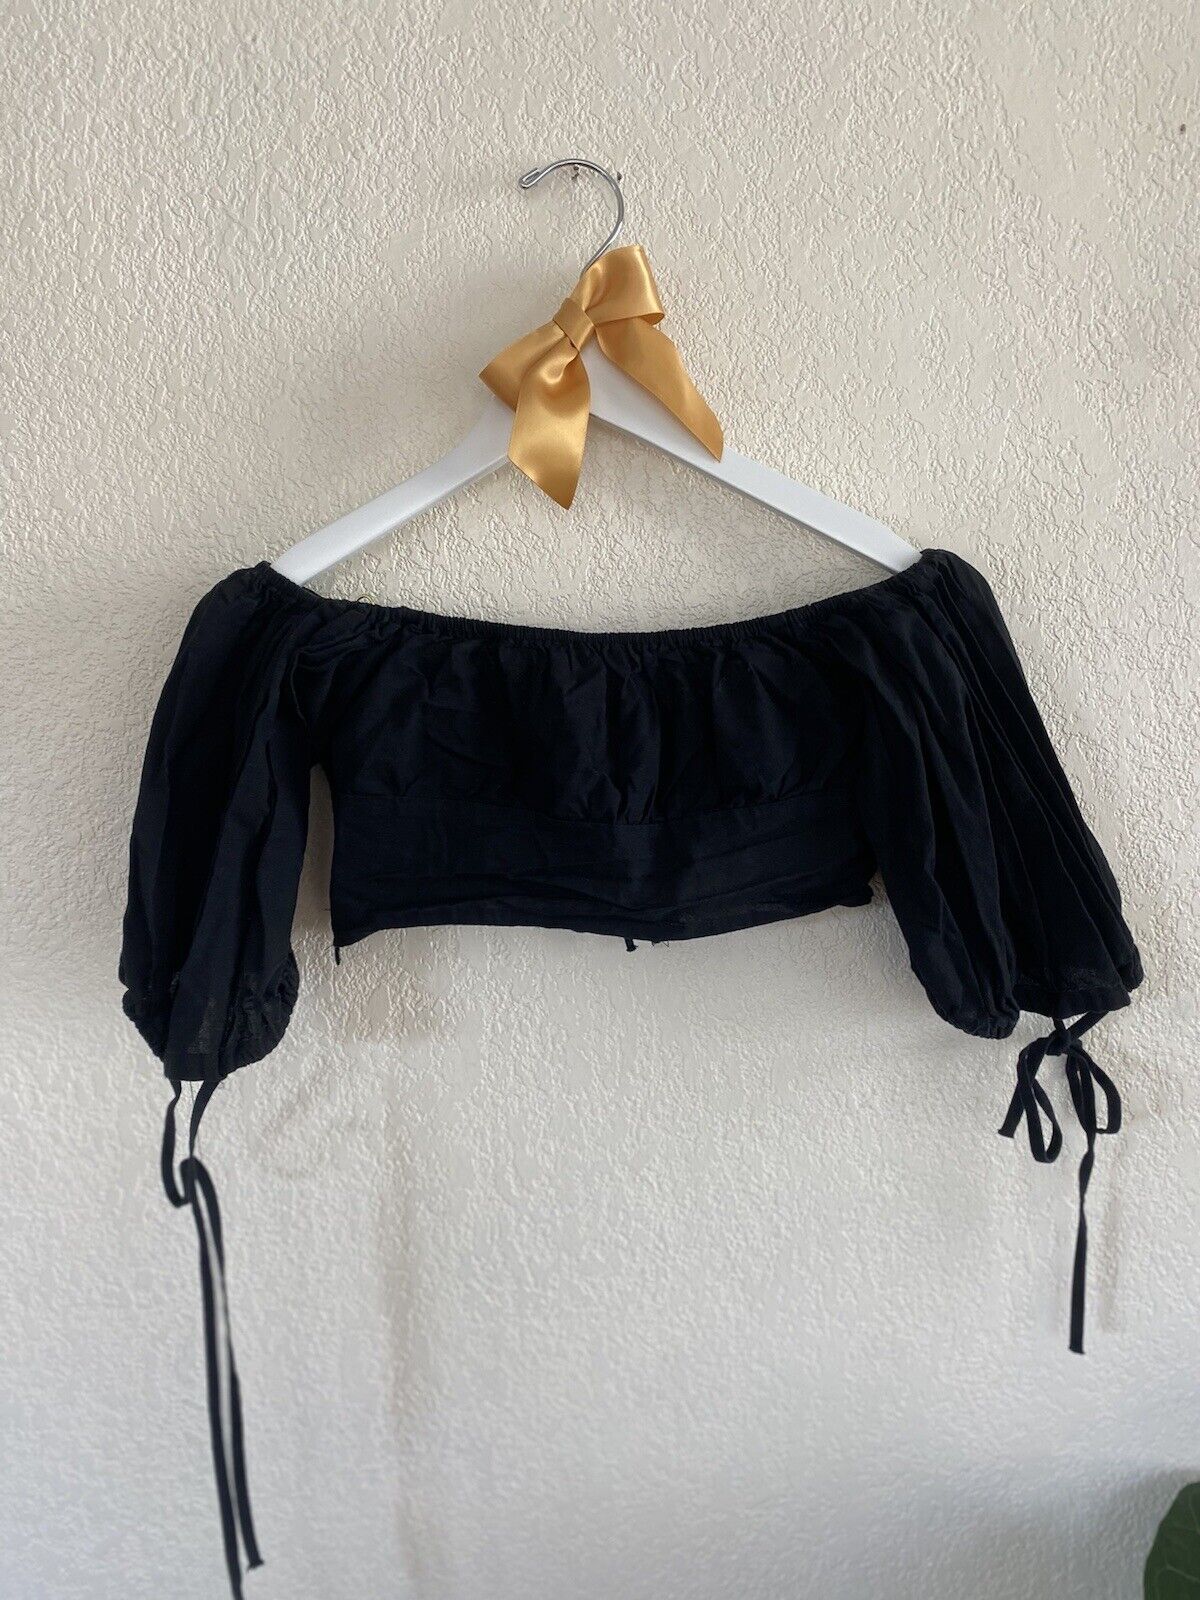 Black Linen Off-The-Shoulder Crop Top - Unbranded - Women's Small